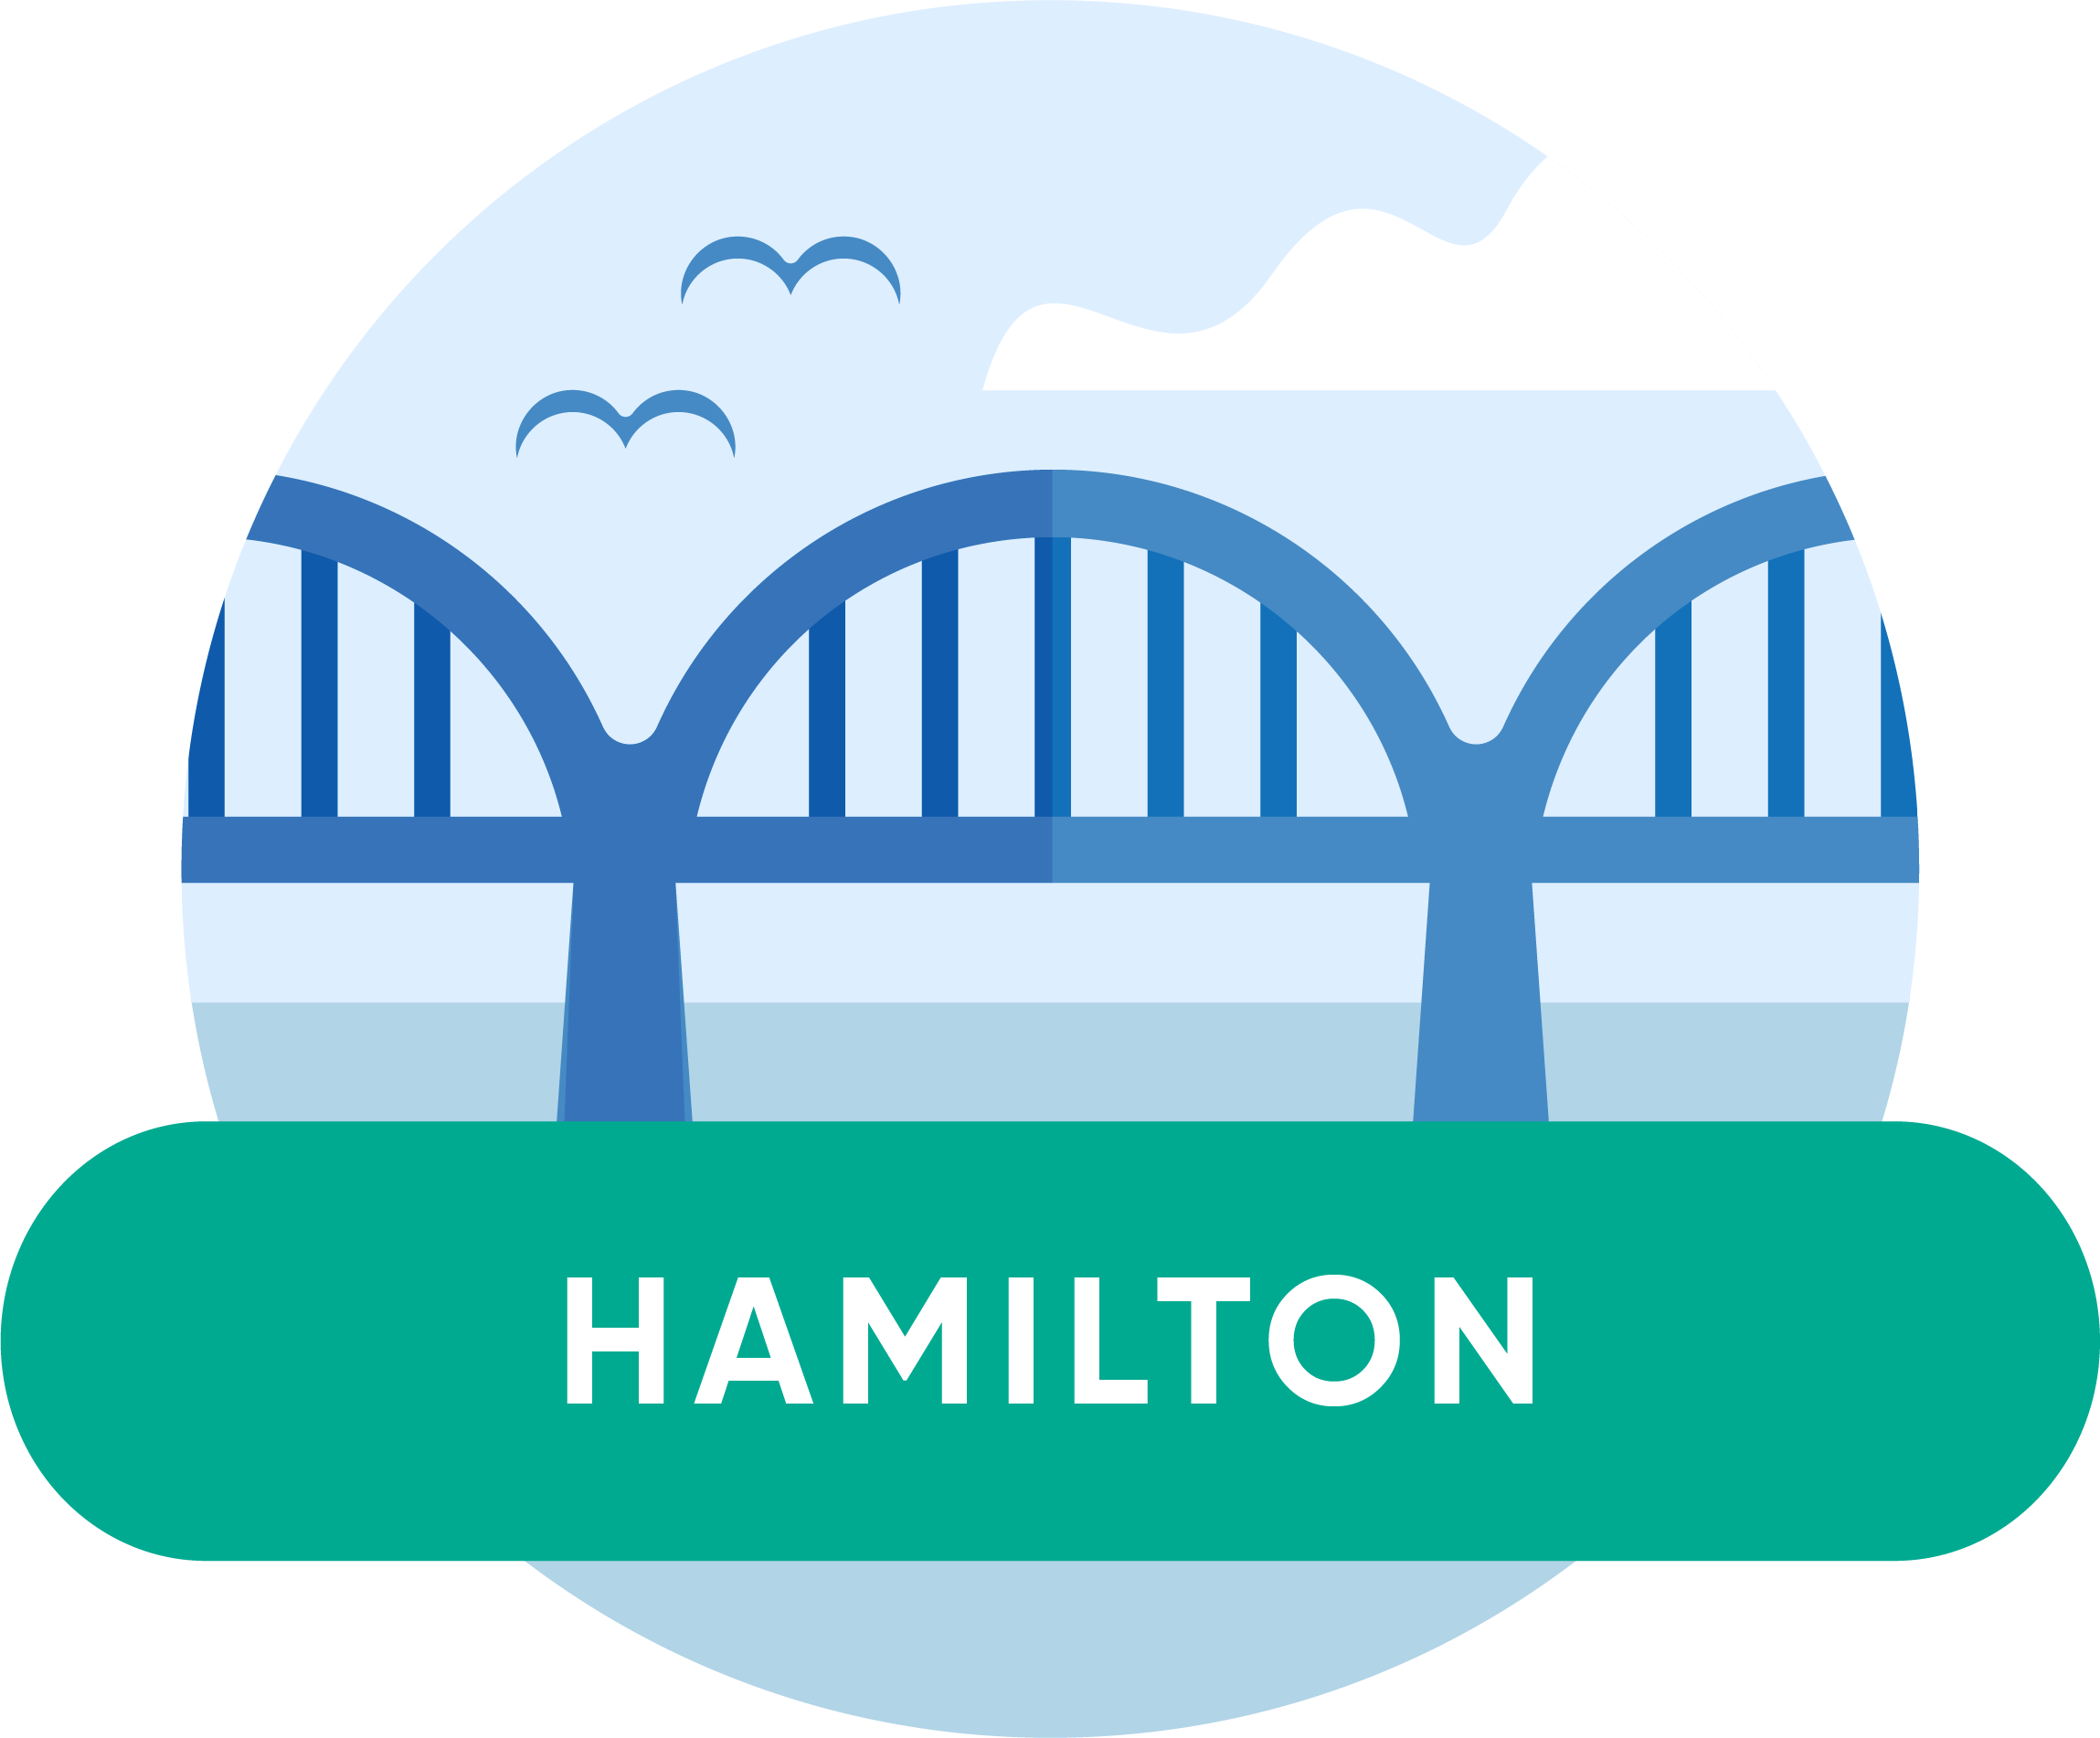 Illustration of Hamilton bridge